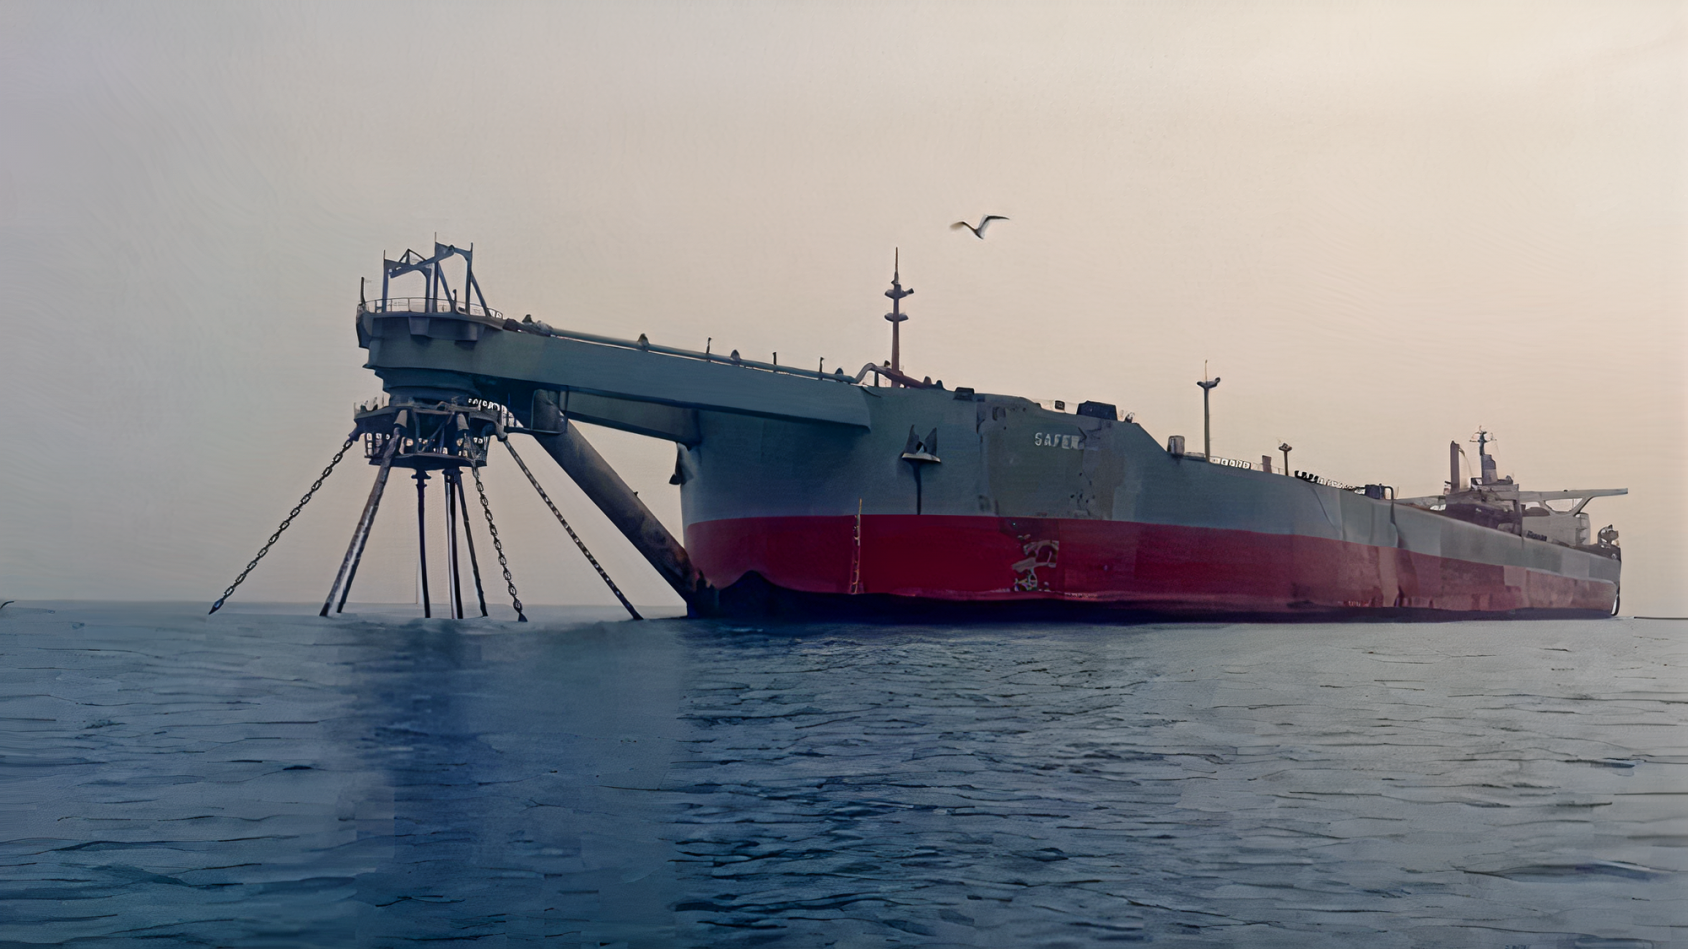 An illustrative photo of an oil tanker, the FSO-Safer.